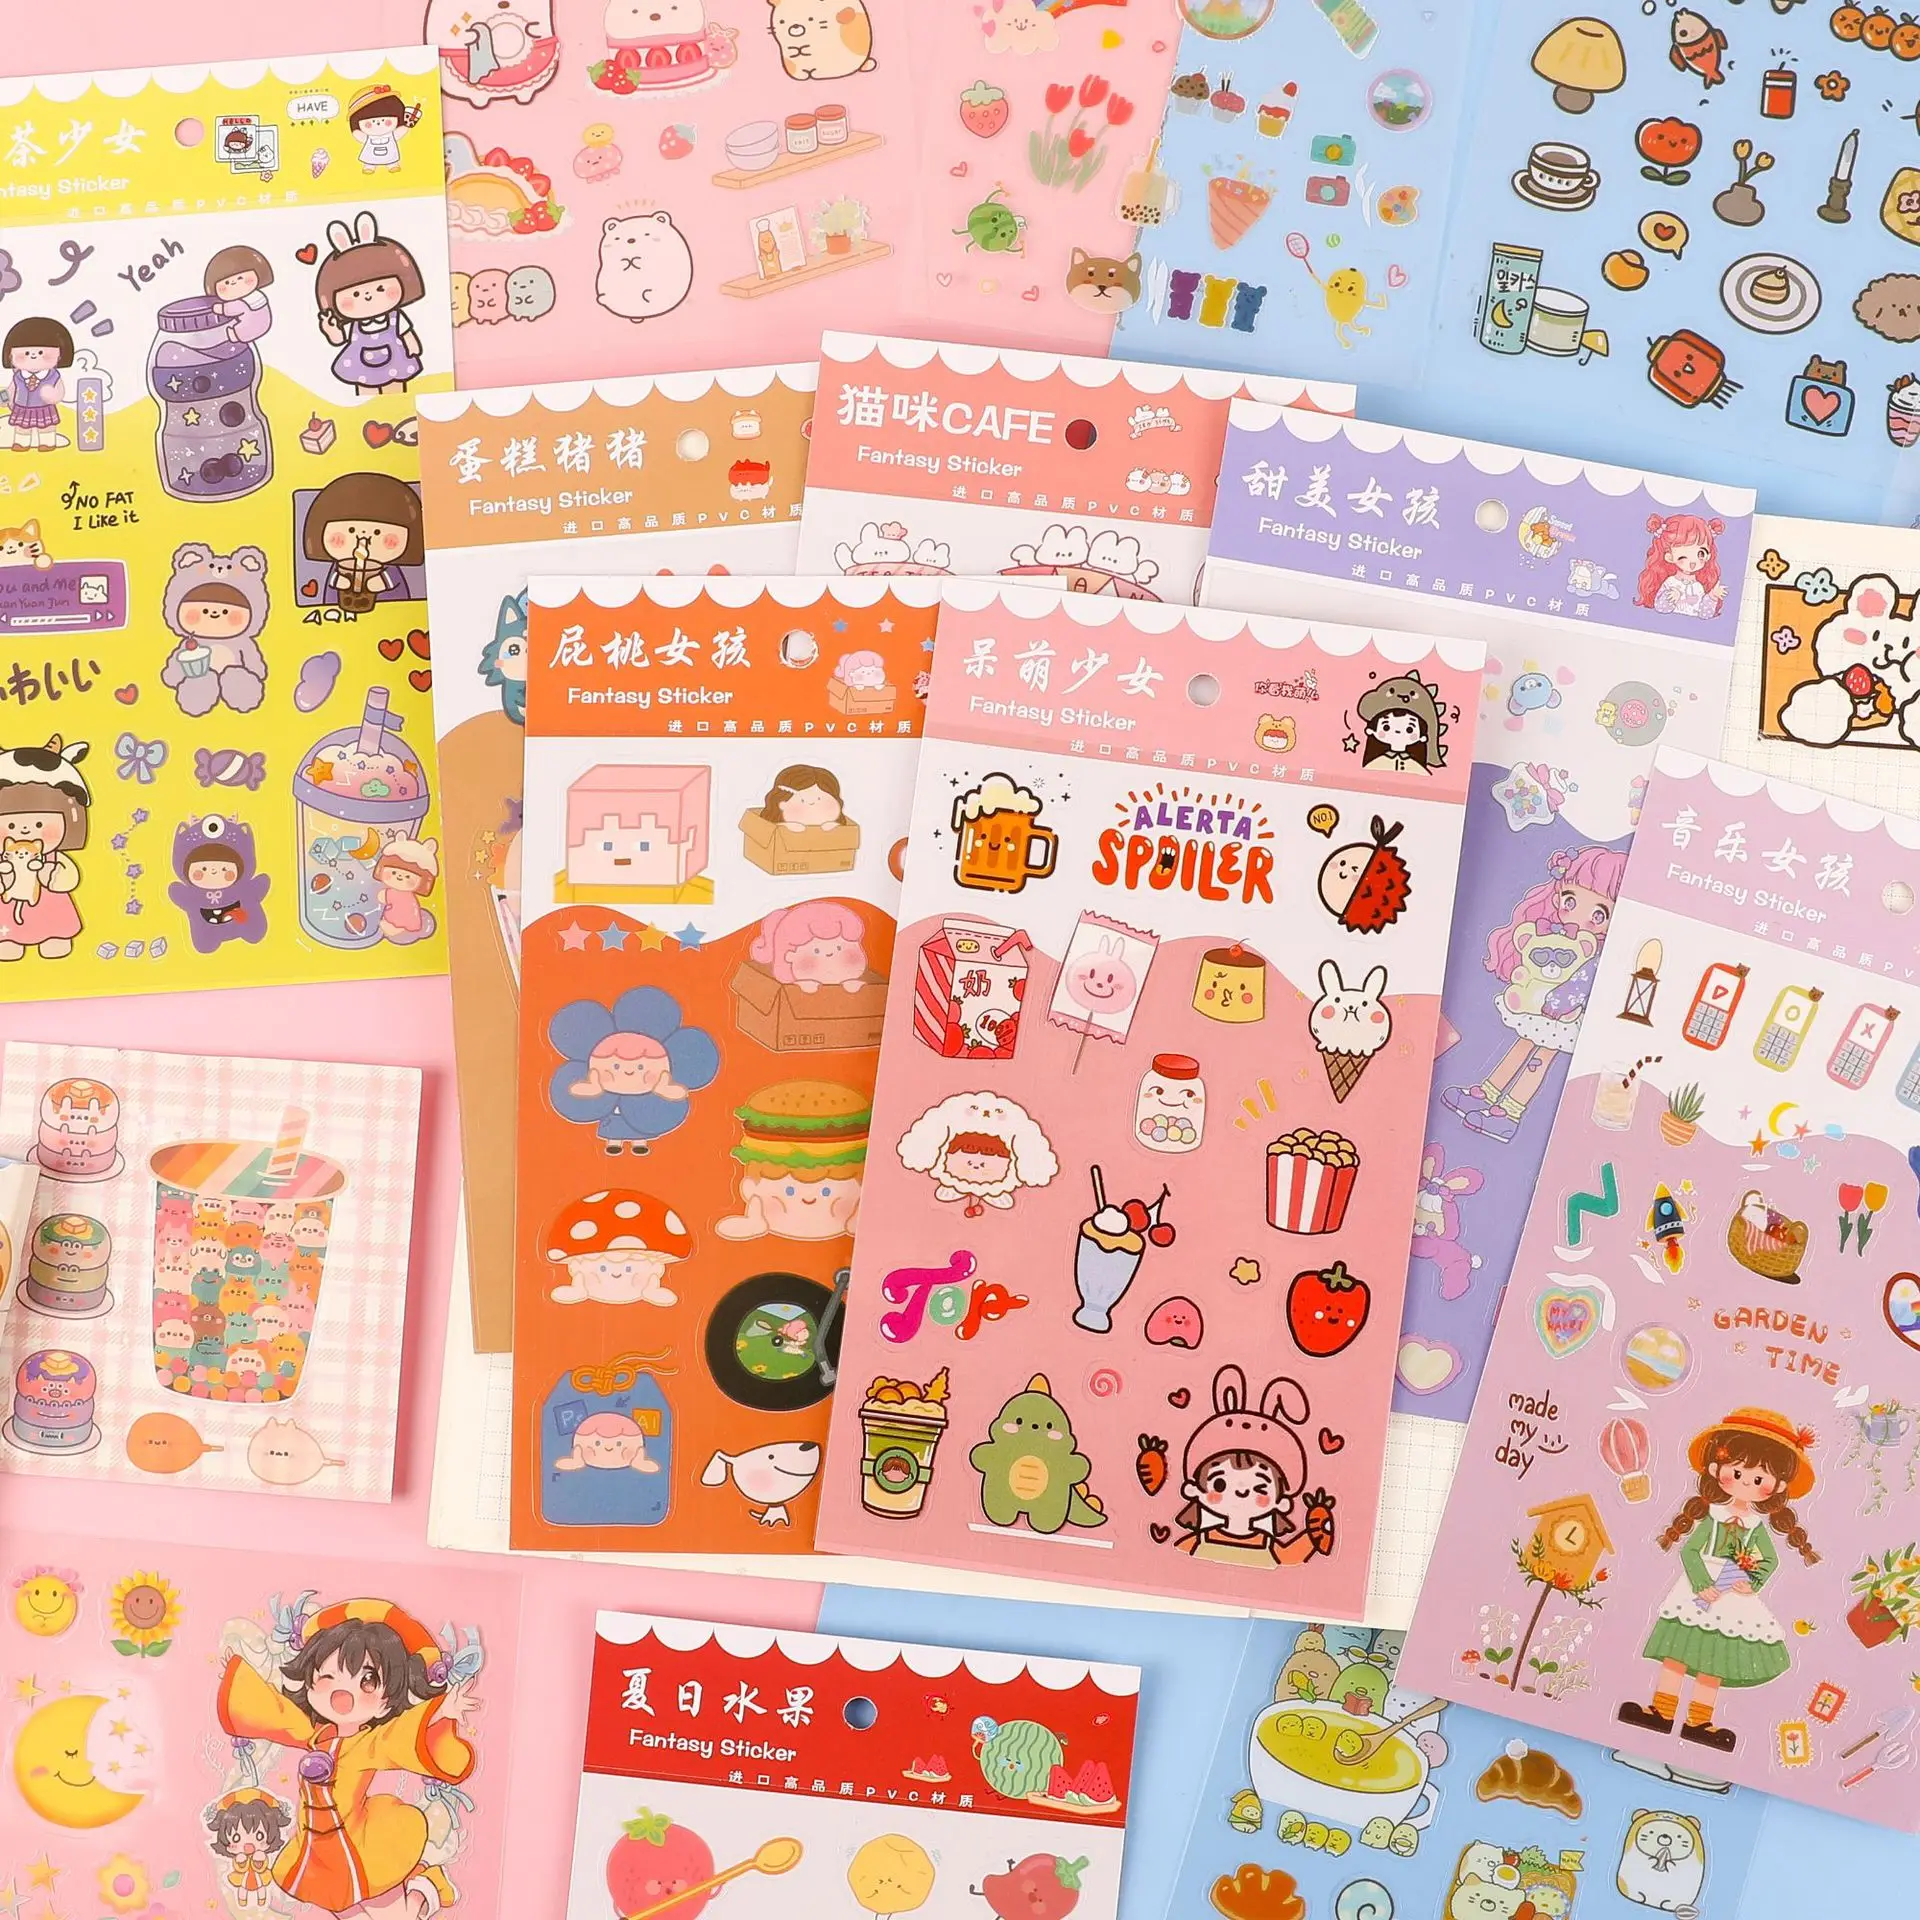 Journal Sweet Girls Cartoon PVC Stickers Diary Waterproof Phone Decorative Decals Animal Notebook Gift Laptop Rabbit Kids